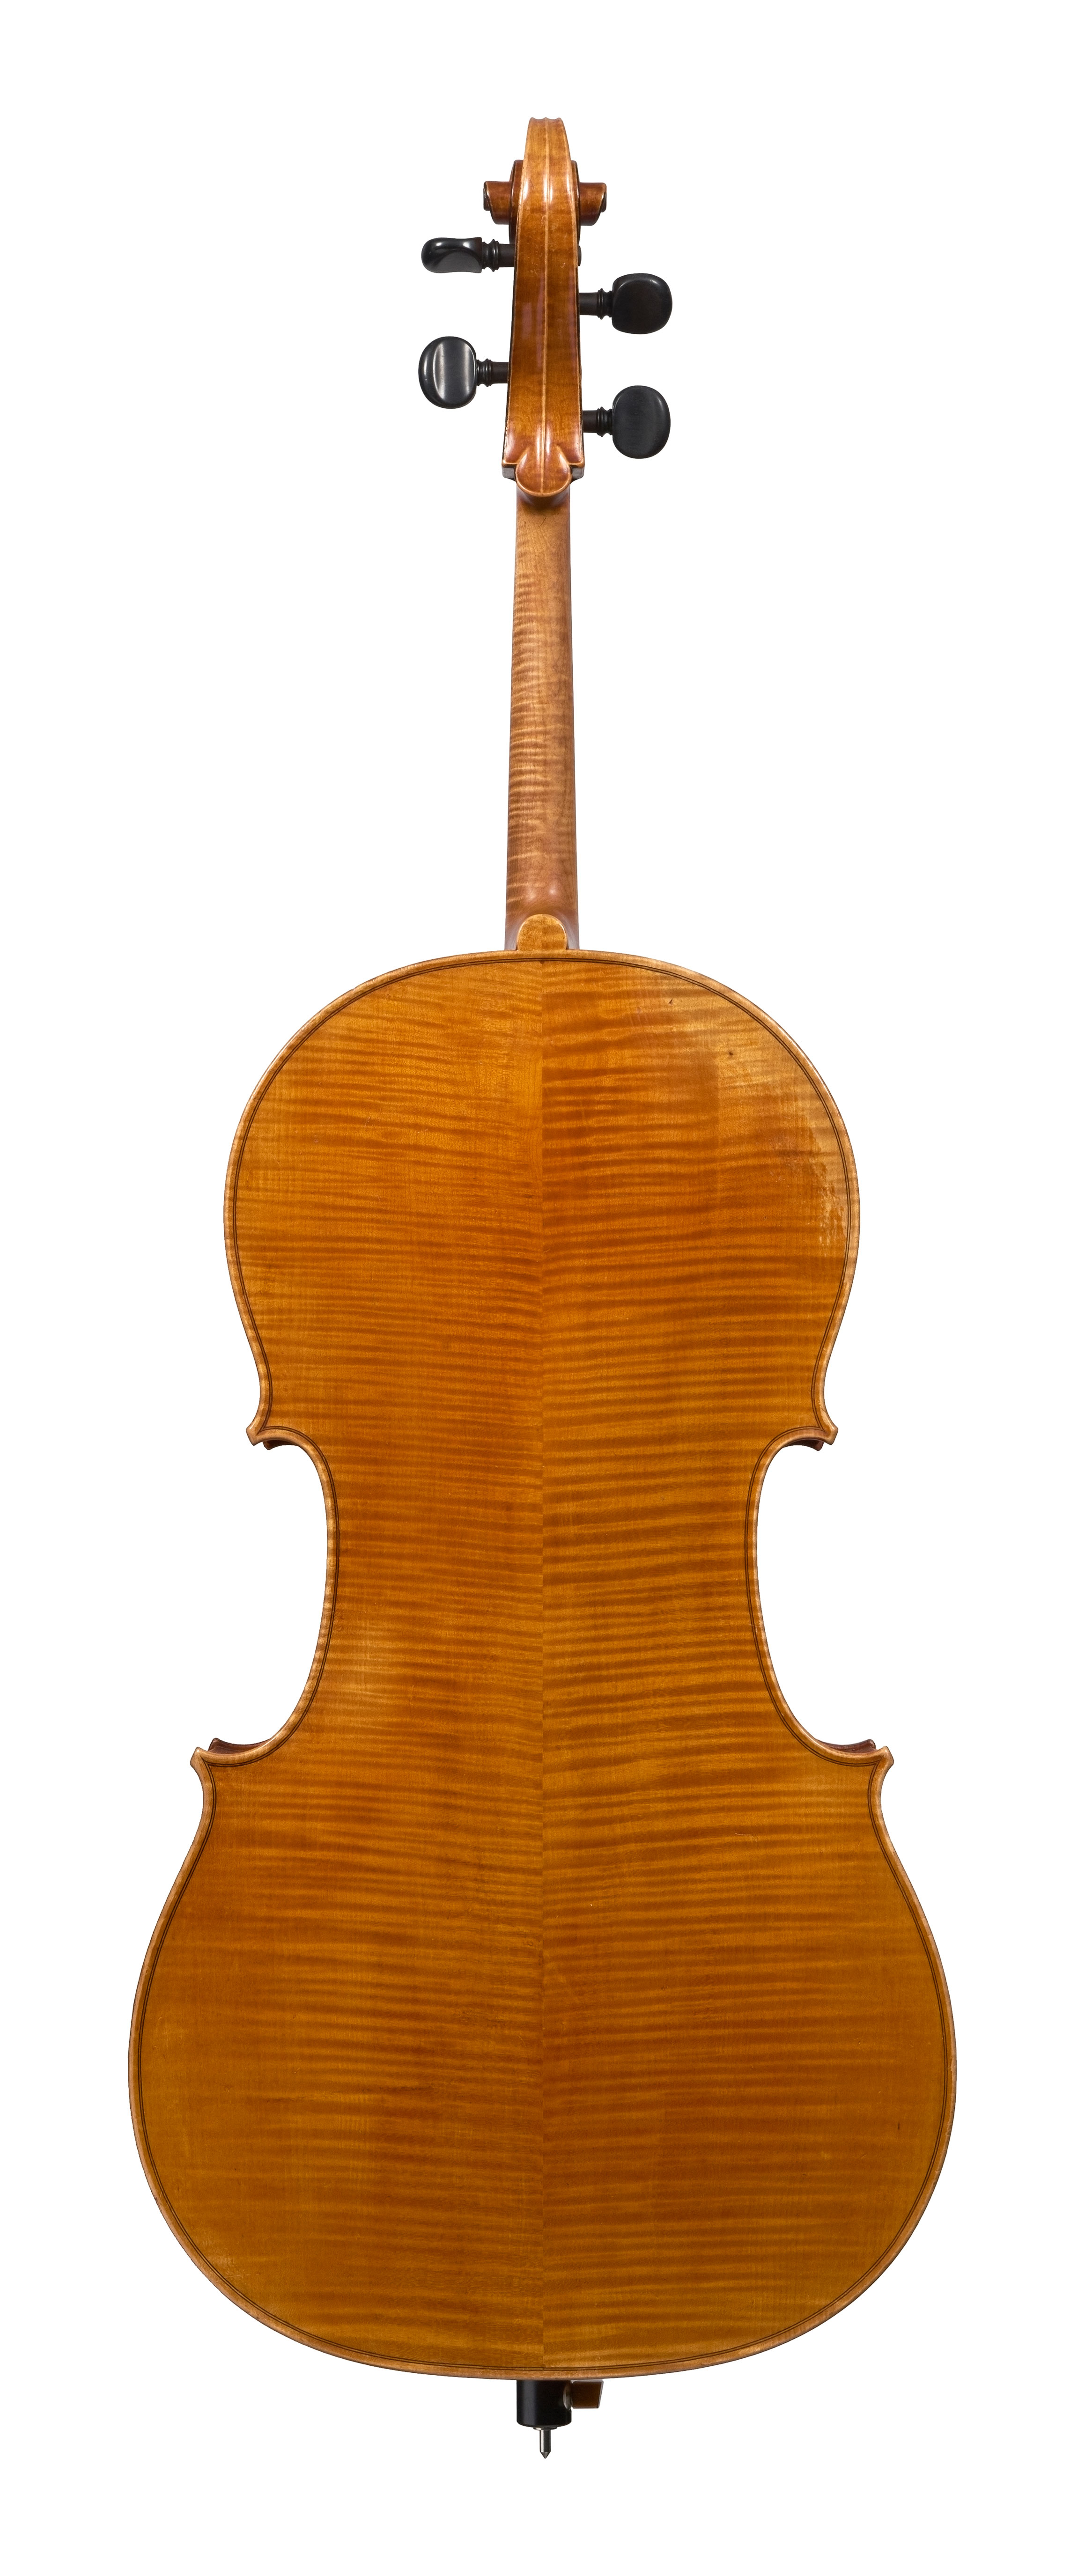 The Ex-vieuxtemps cello made by Jean Baptiste Vuillaume